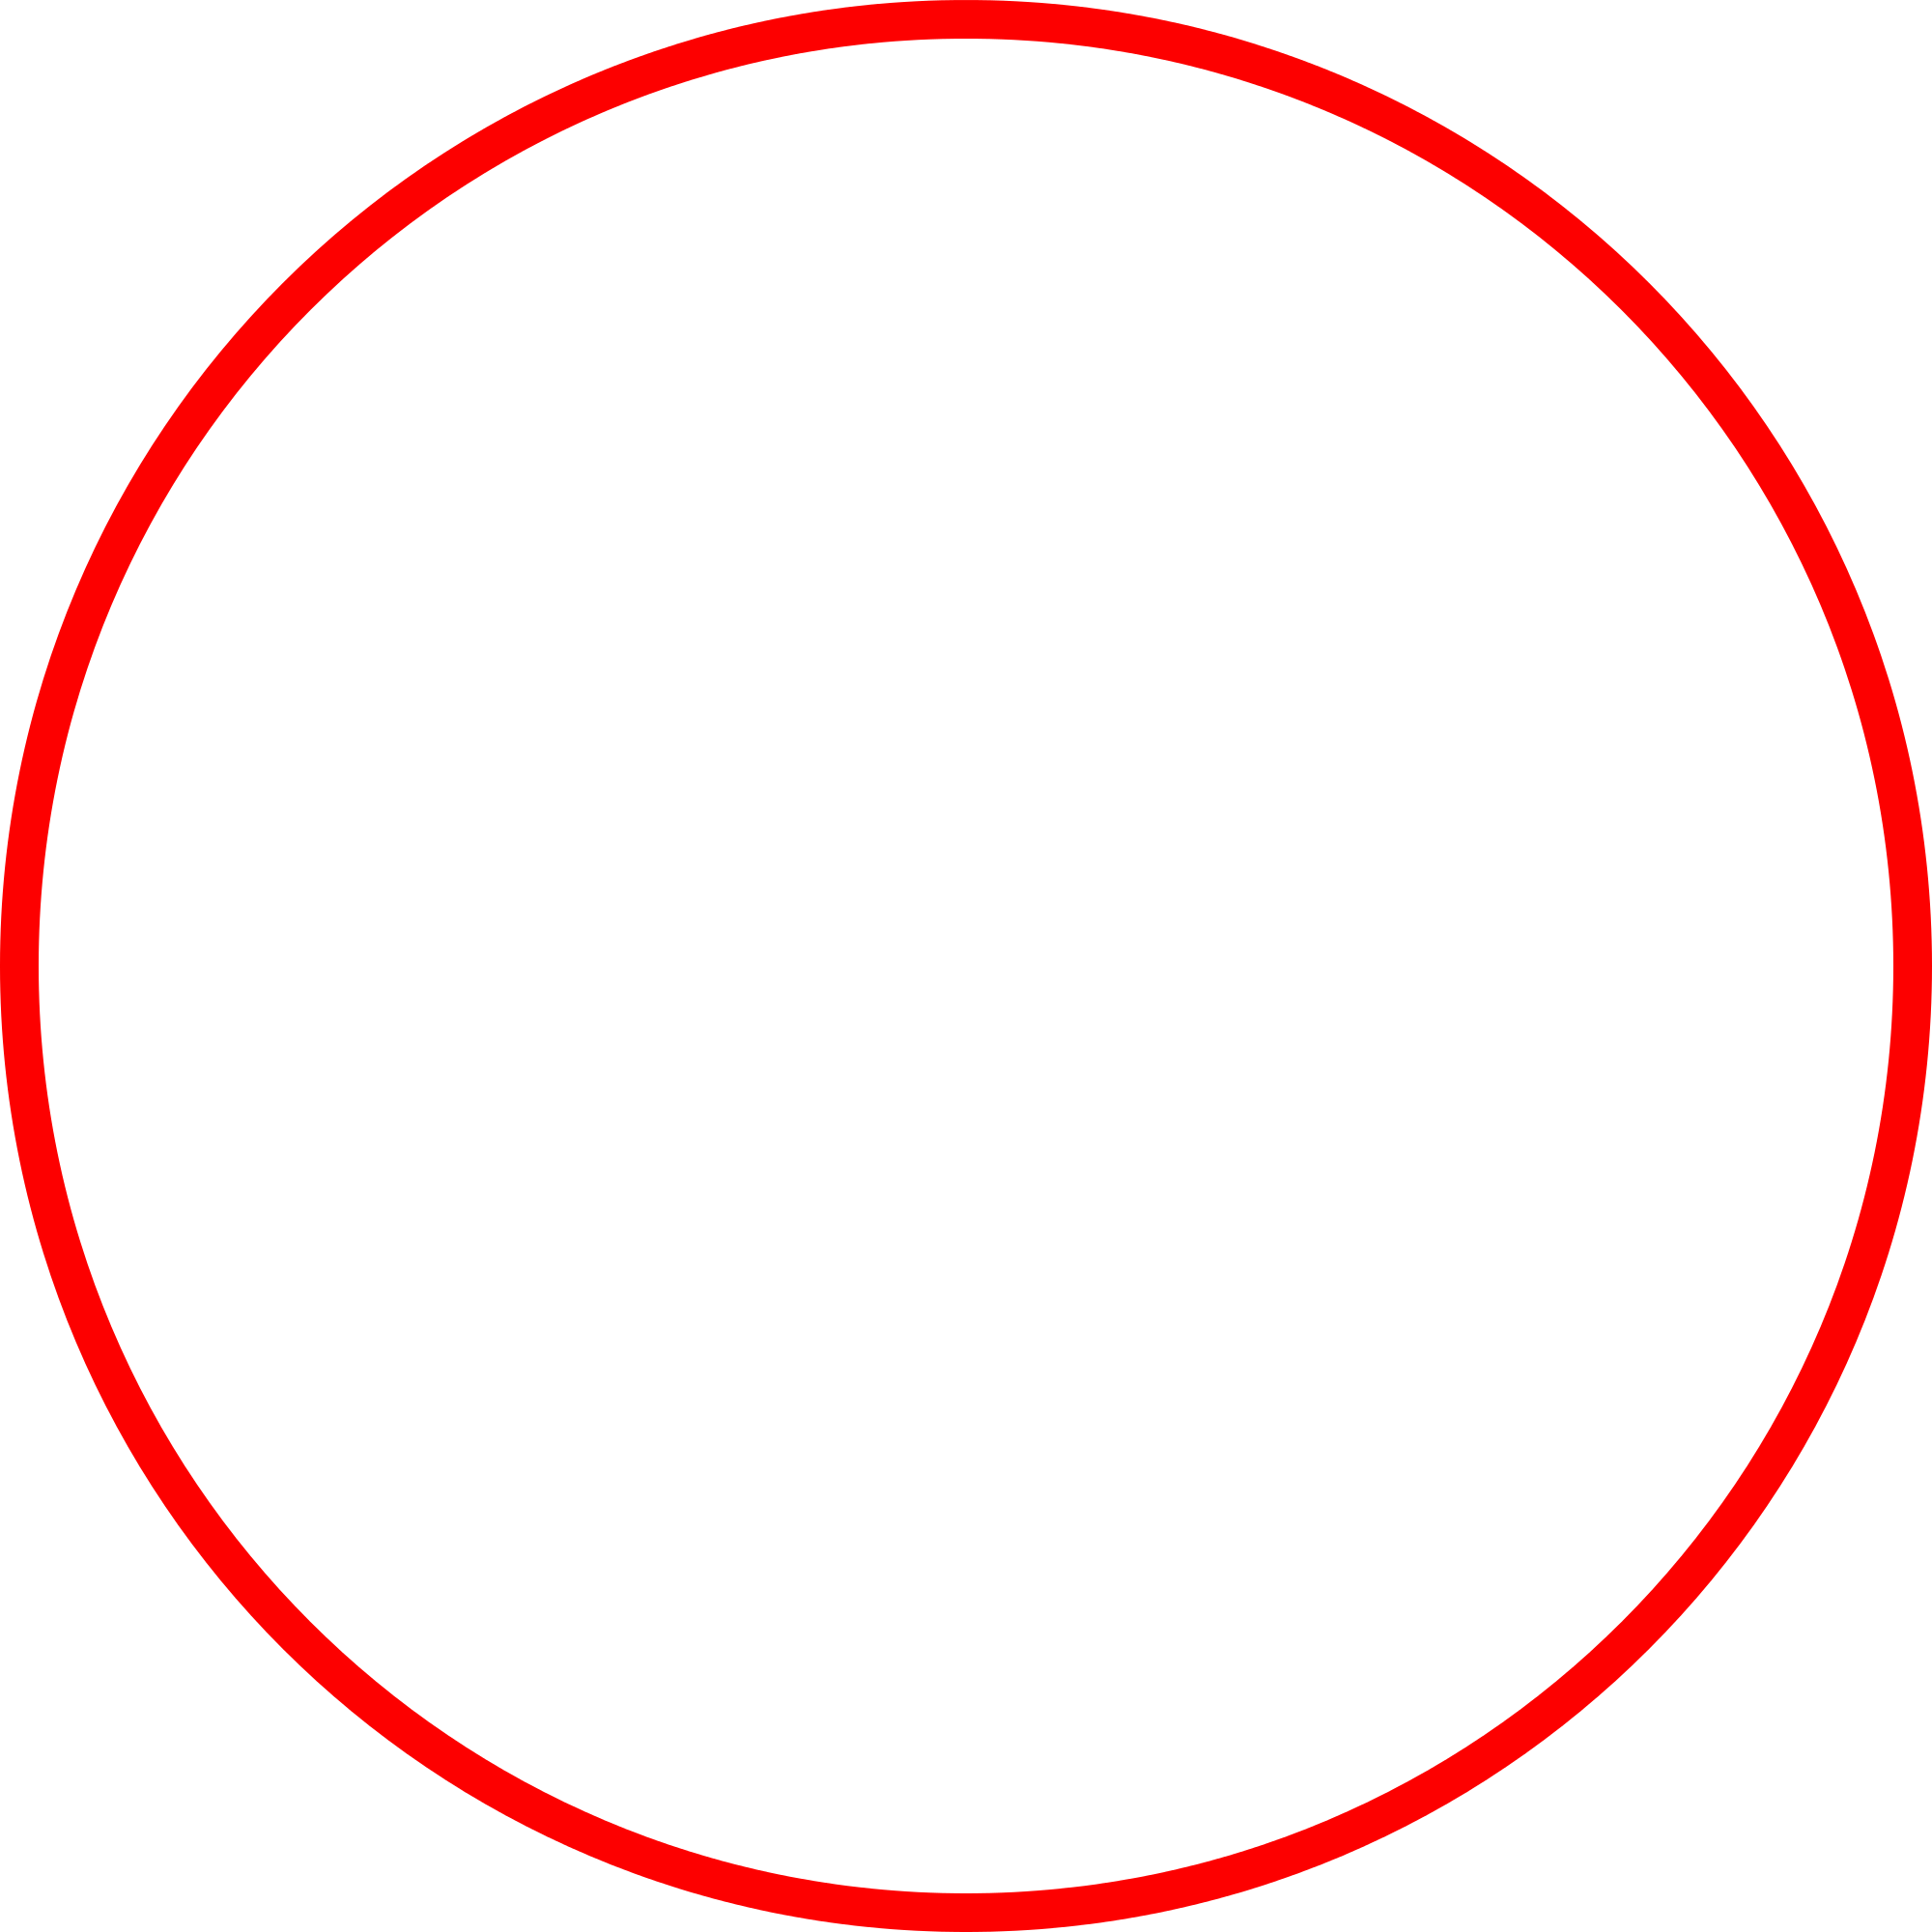 red simple download circle image #41661